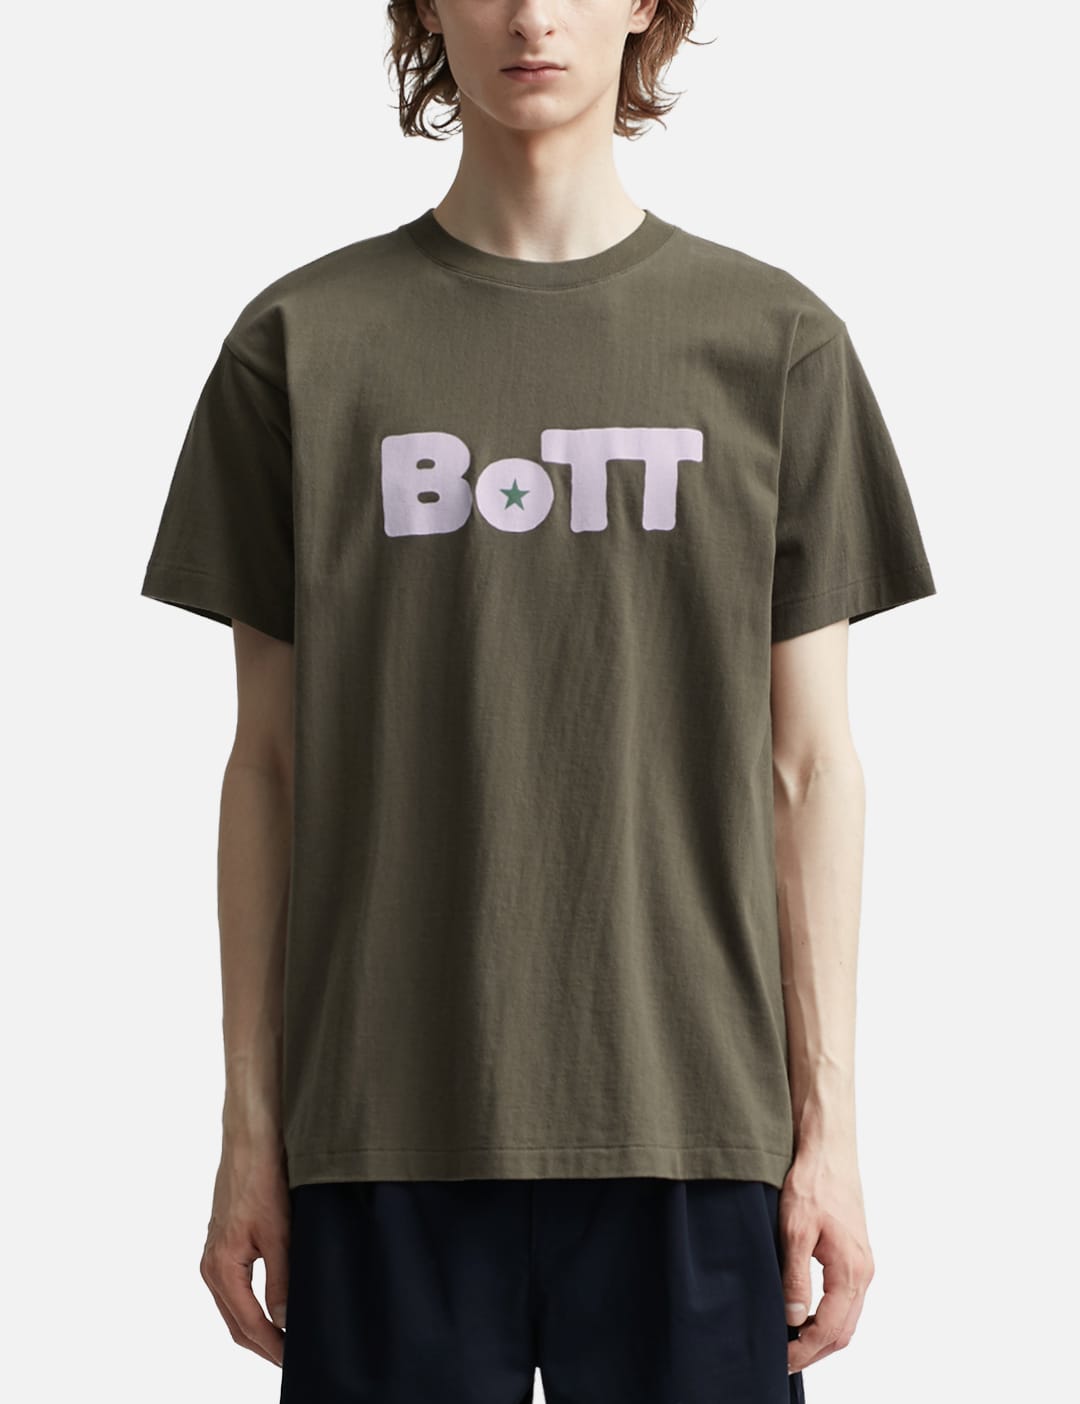 BoTT - Star Logo T-shirt | HBX - Globally Curated Fashion and 